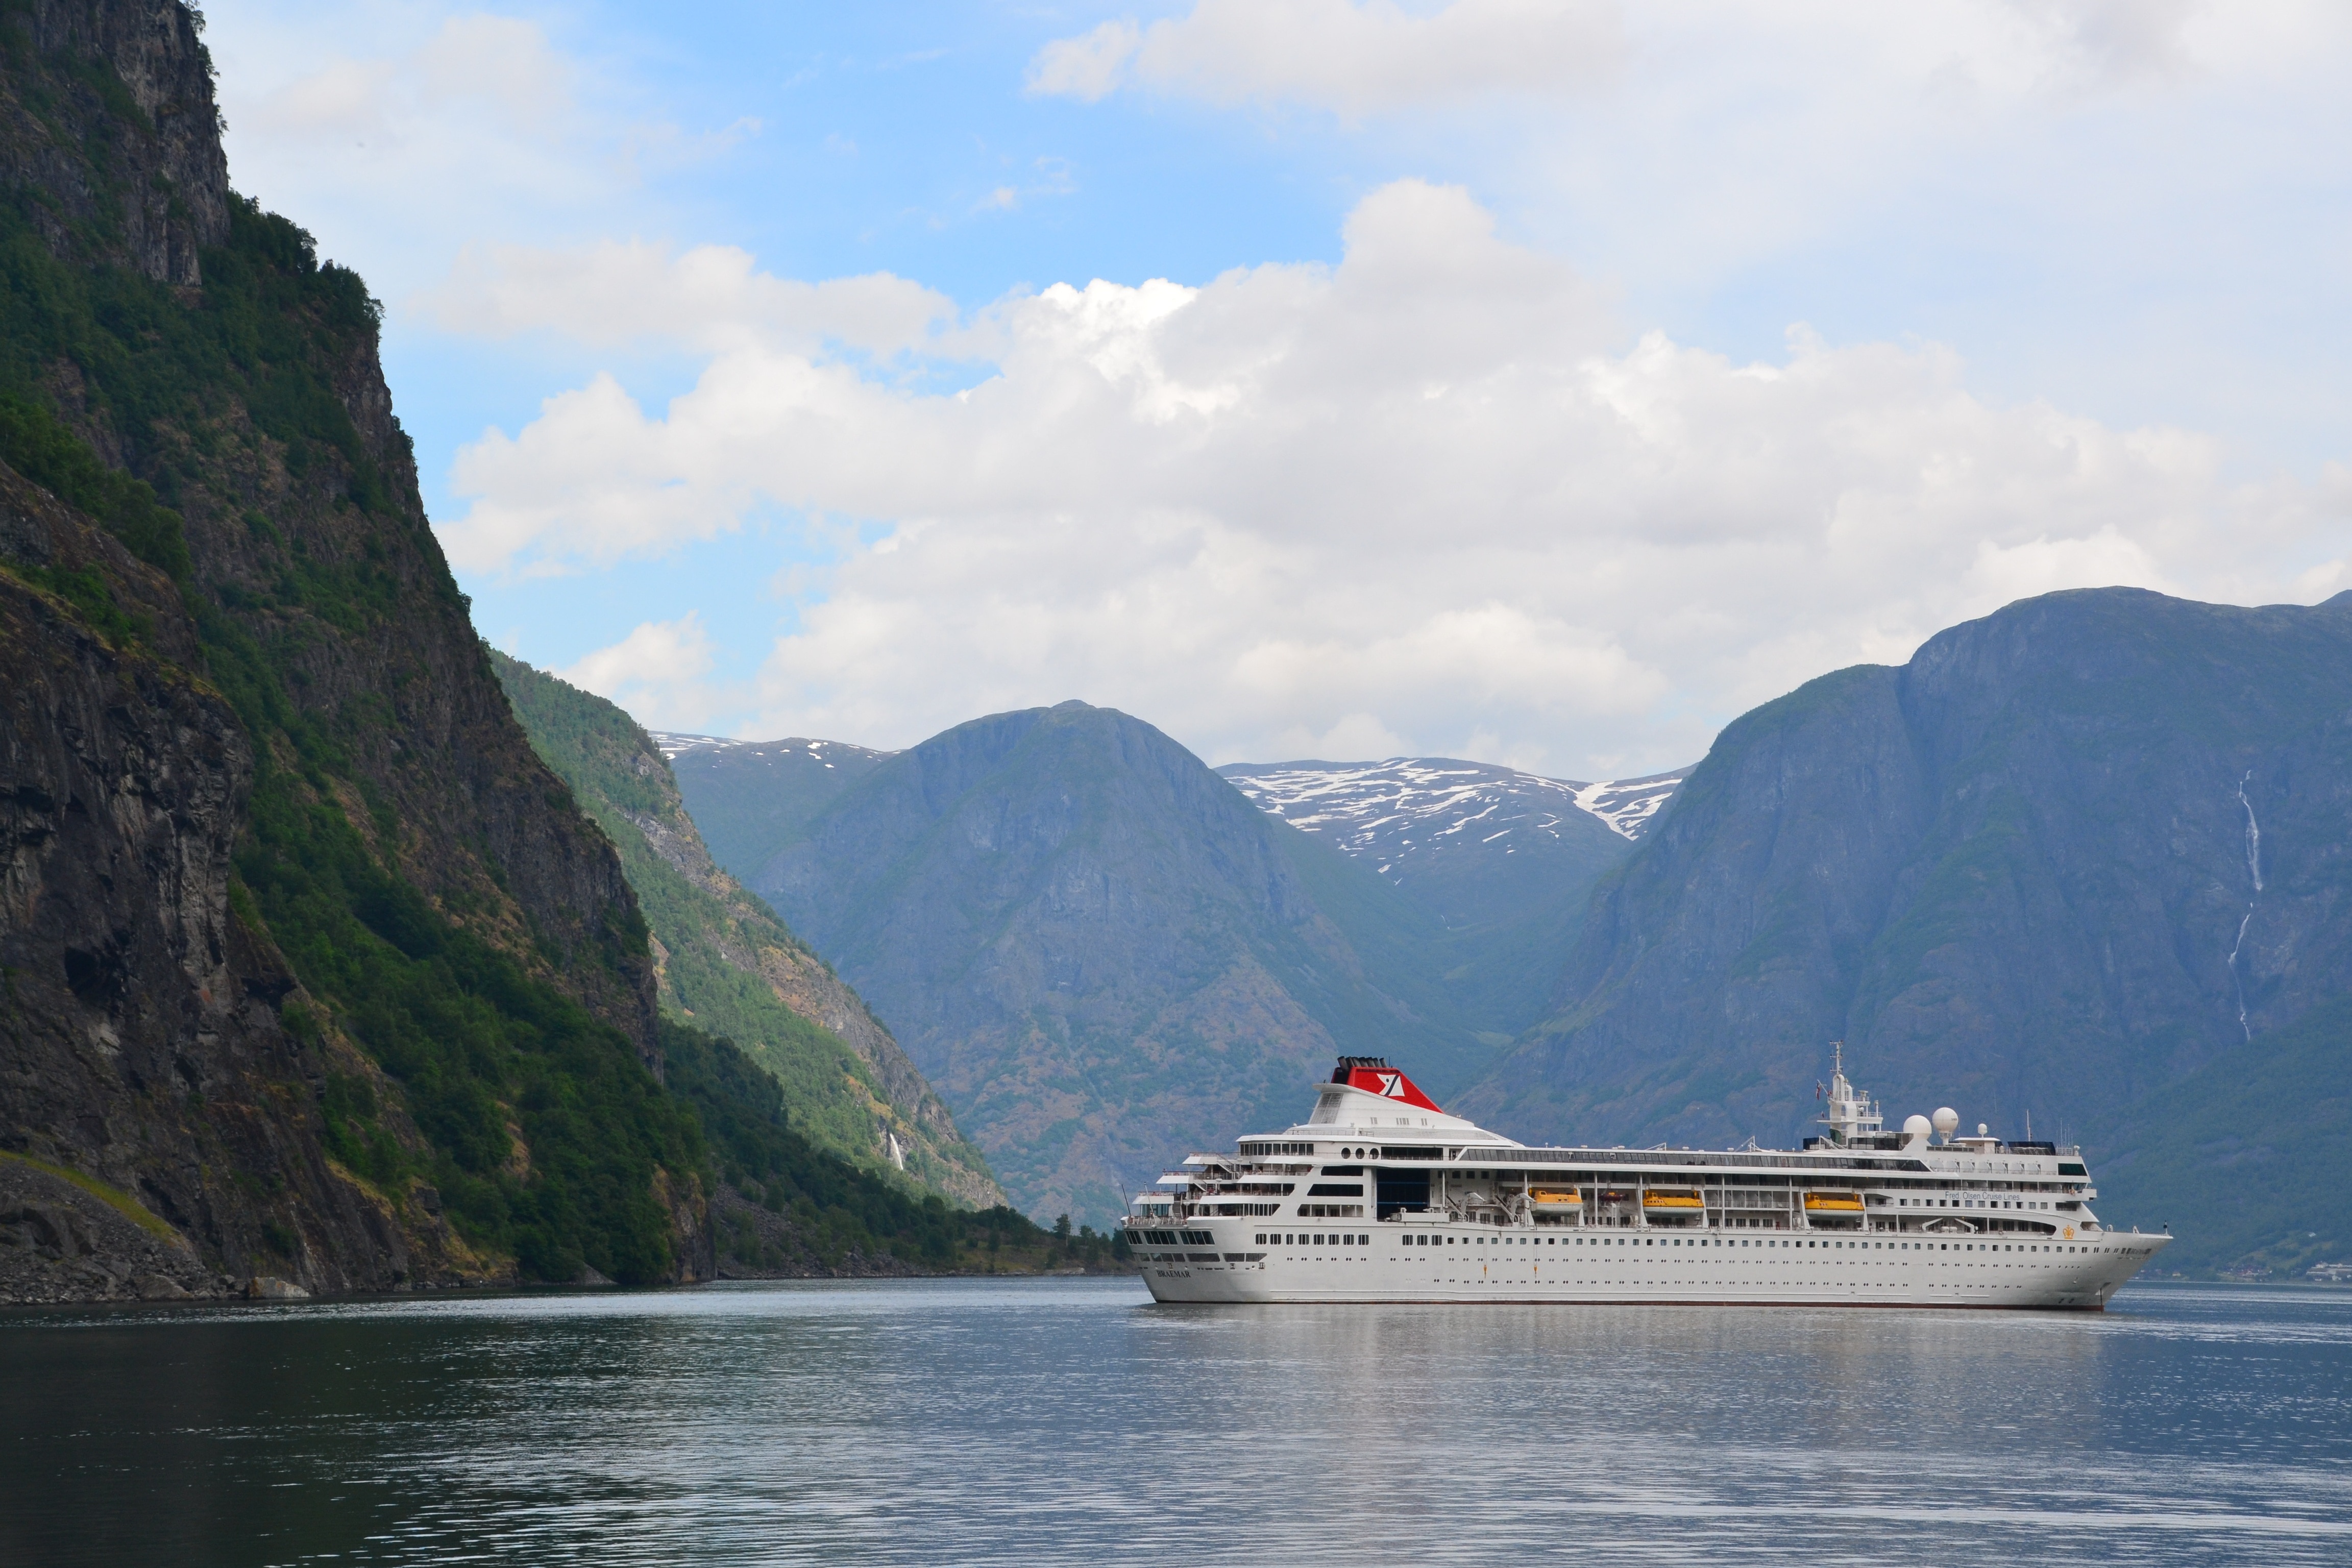 Fjord, Ship, Cruise, Norway, Cruise Ship, mountain, scenics